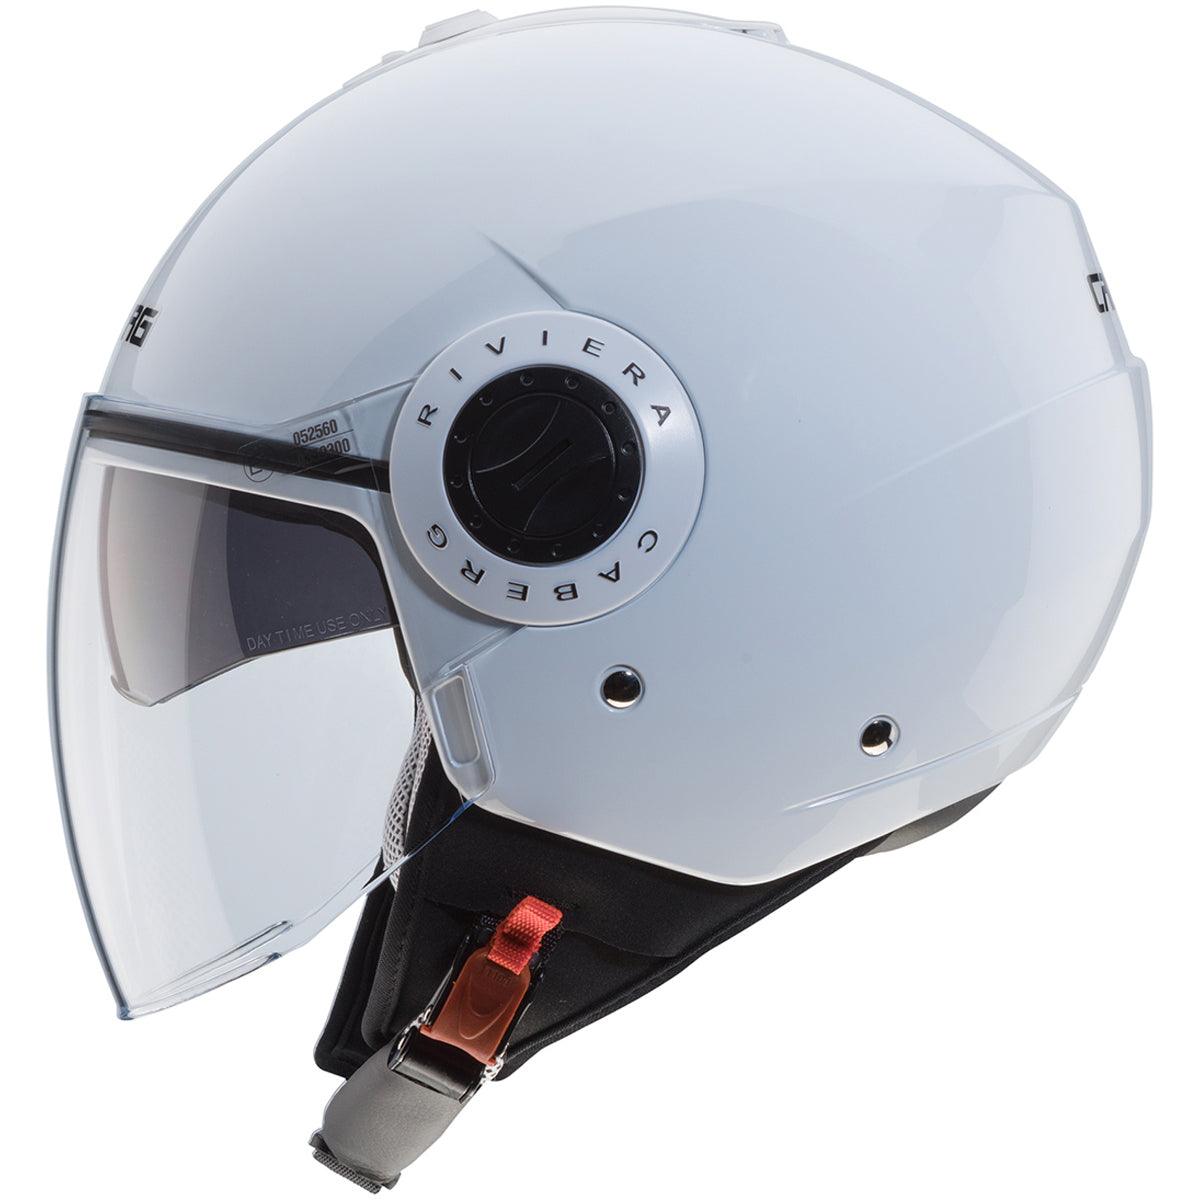 Caberg Riviera V3 Helmet - White - getgearedshop